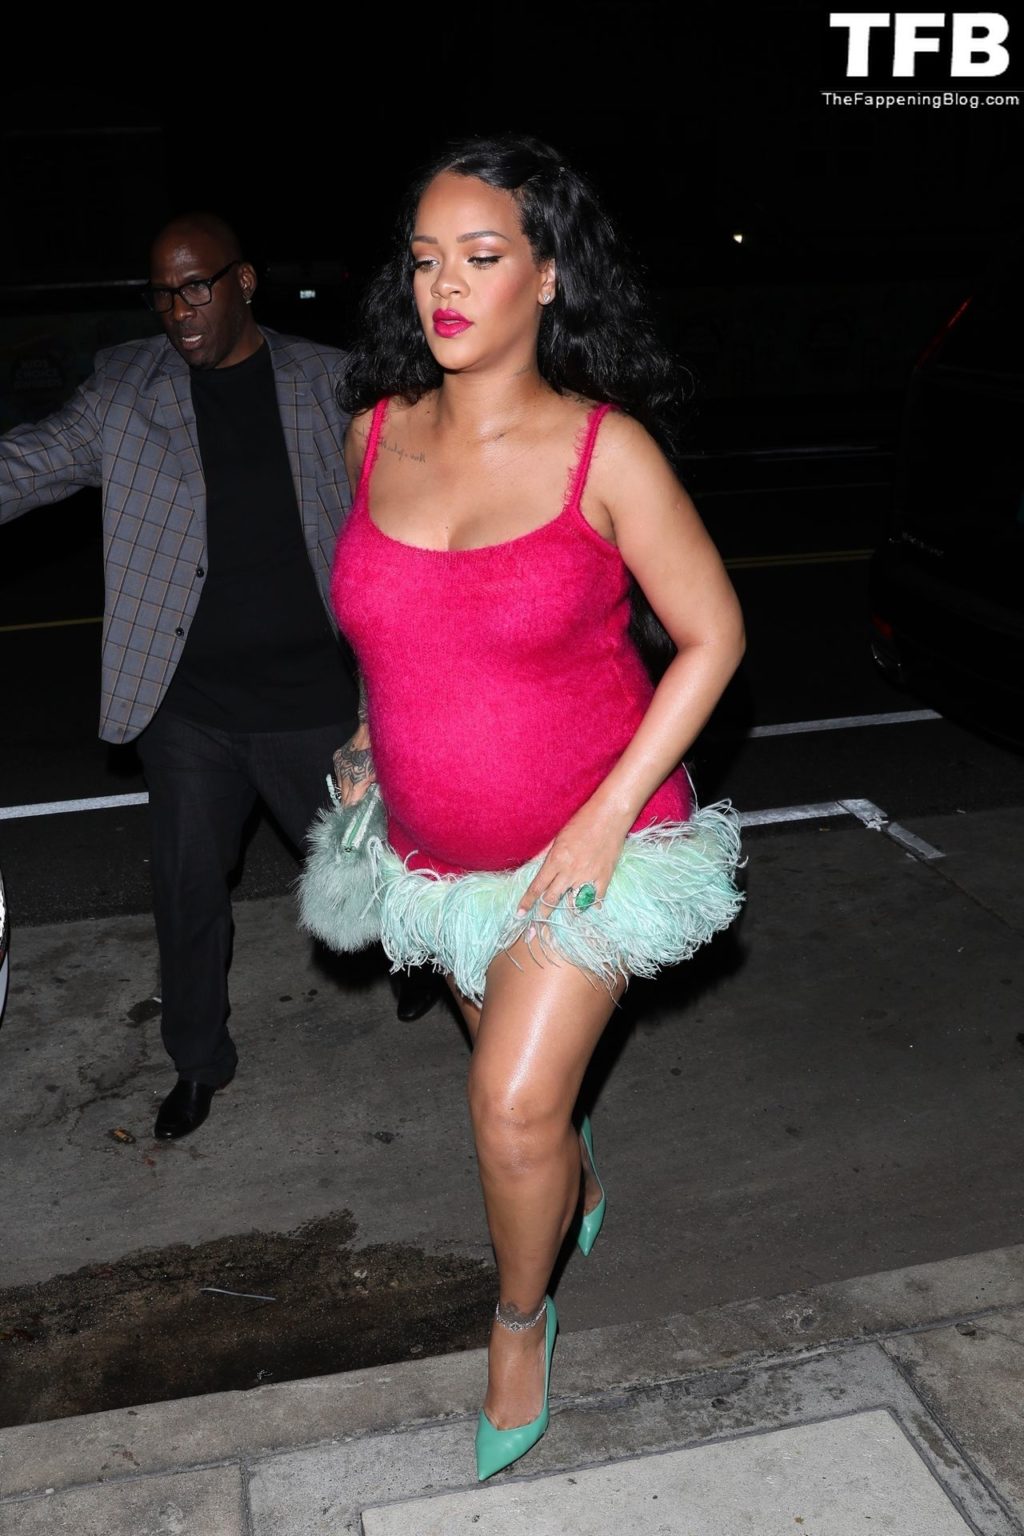 Rihanna Sexy The Fappening Blog 62 1024x1536 - Rihanna Puts Her Baby Bump on Display Grabbing Dinner at Giorgio Baldi (100 Photos)